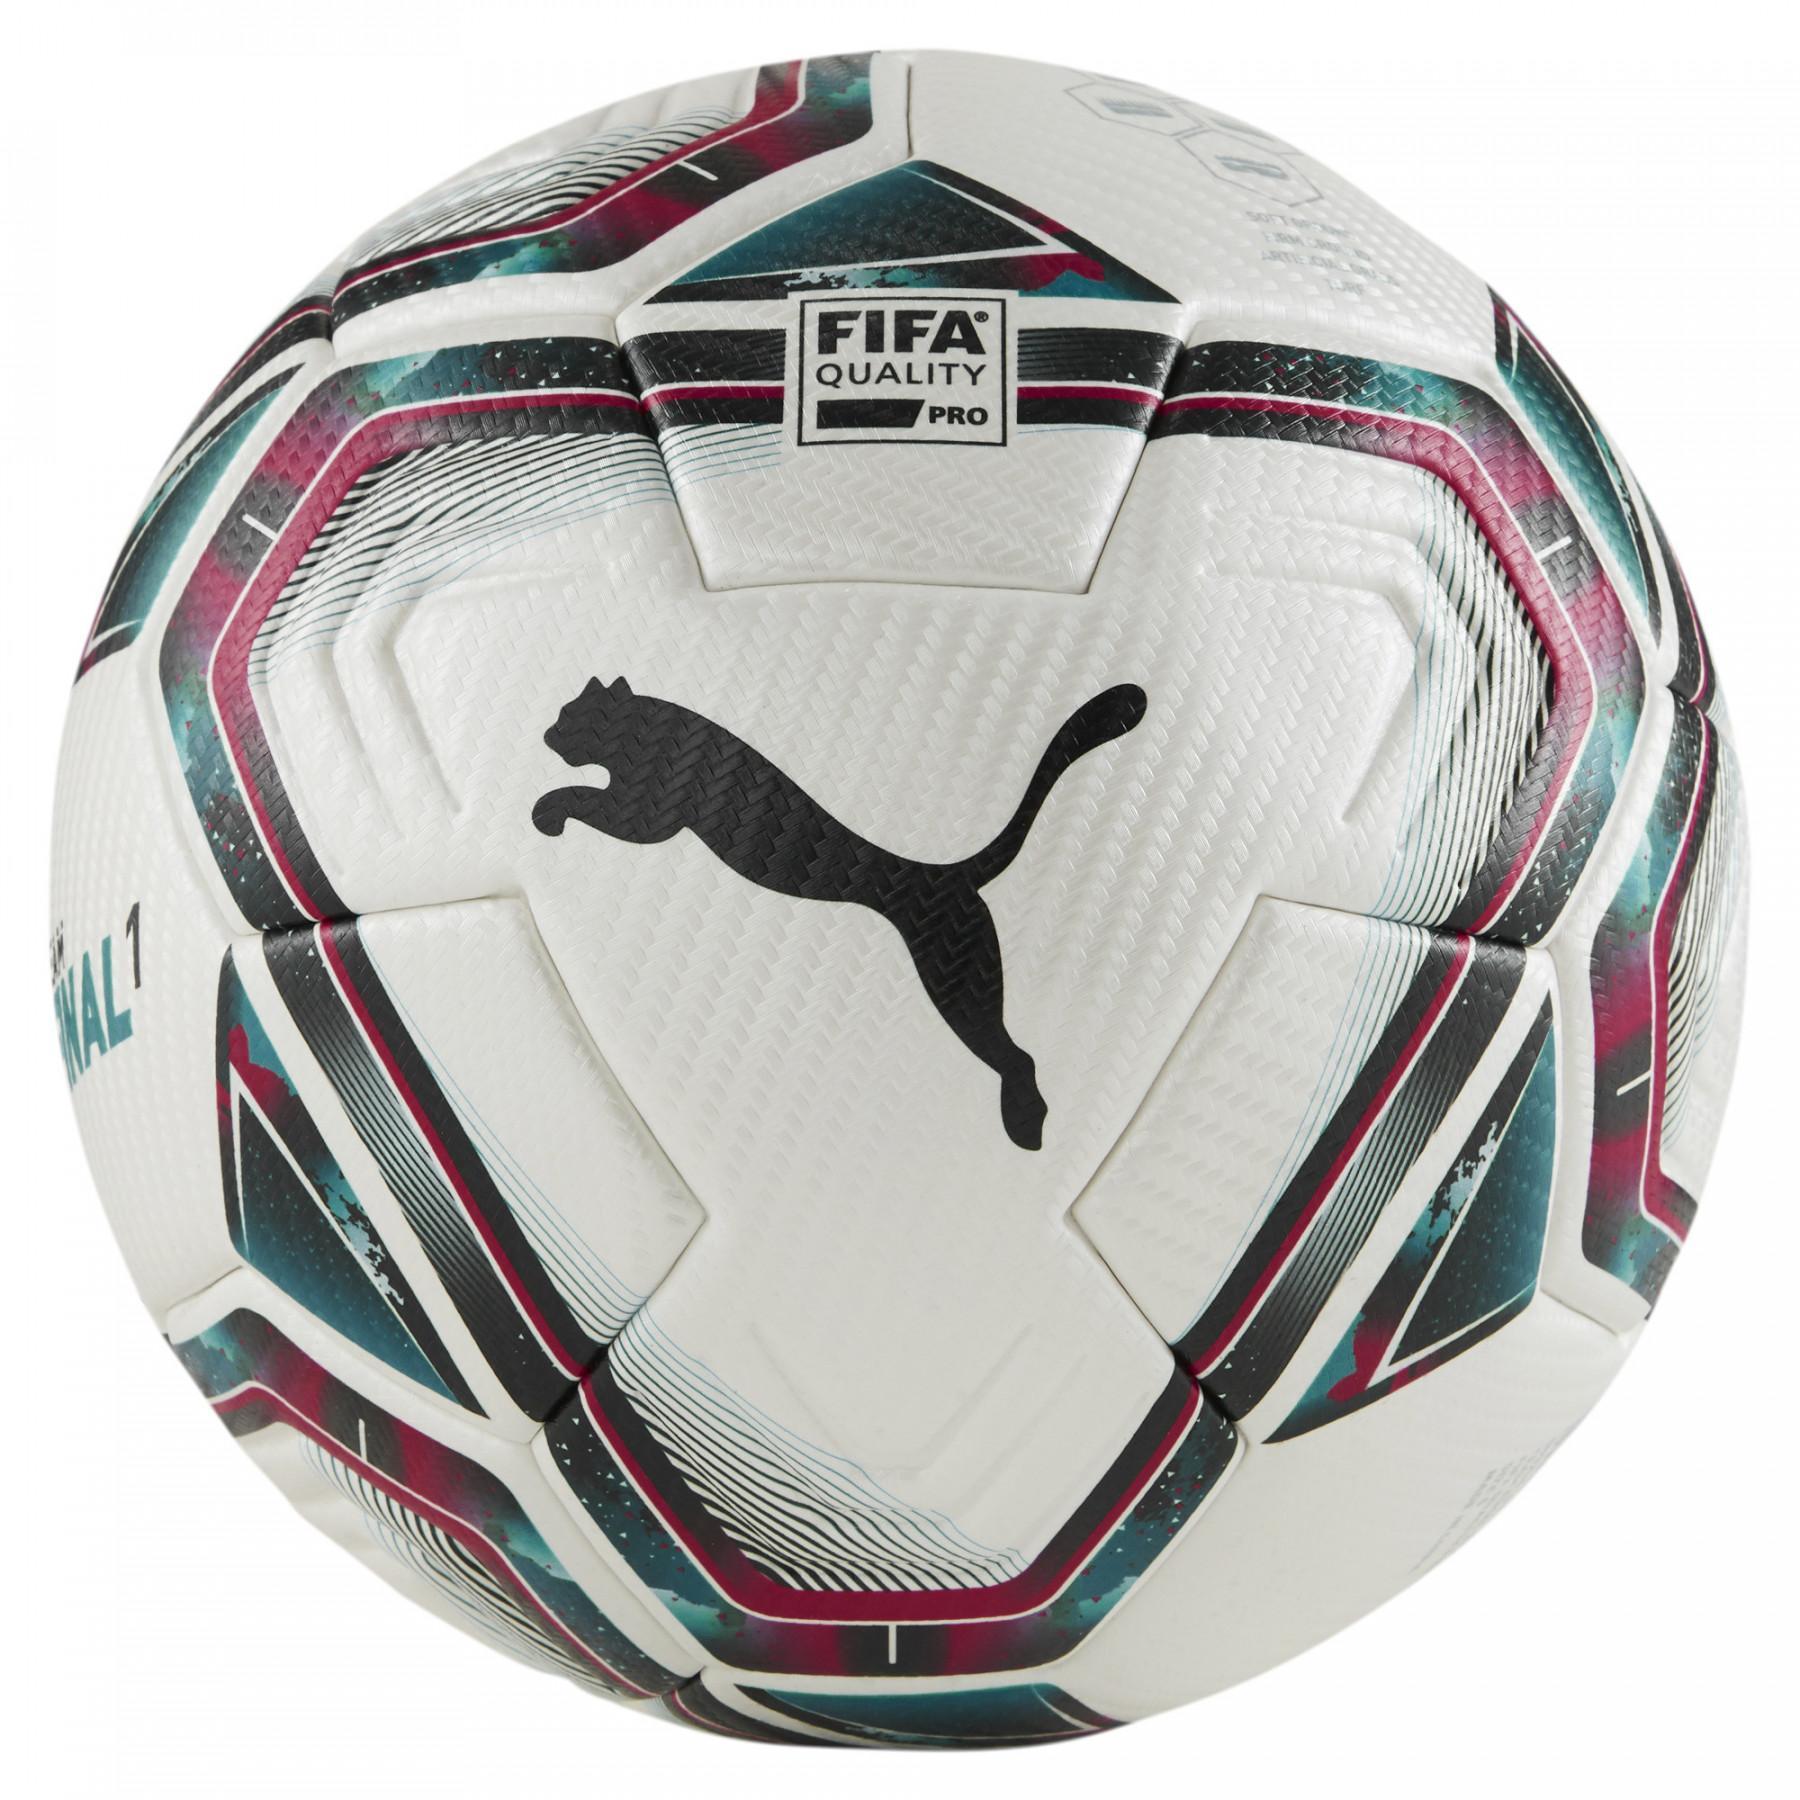 Balon Puma Final 1 Fifa Quality Pro